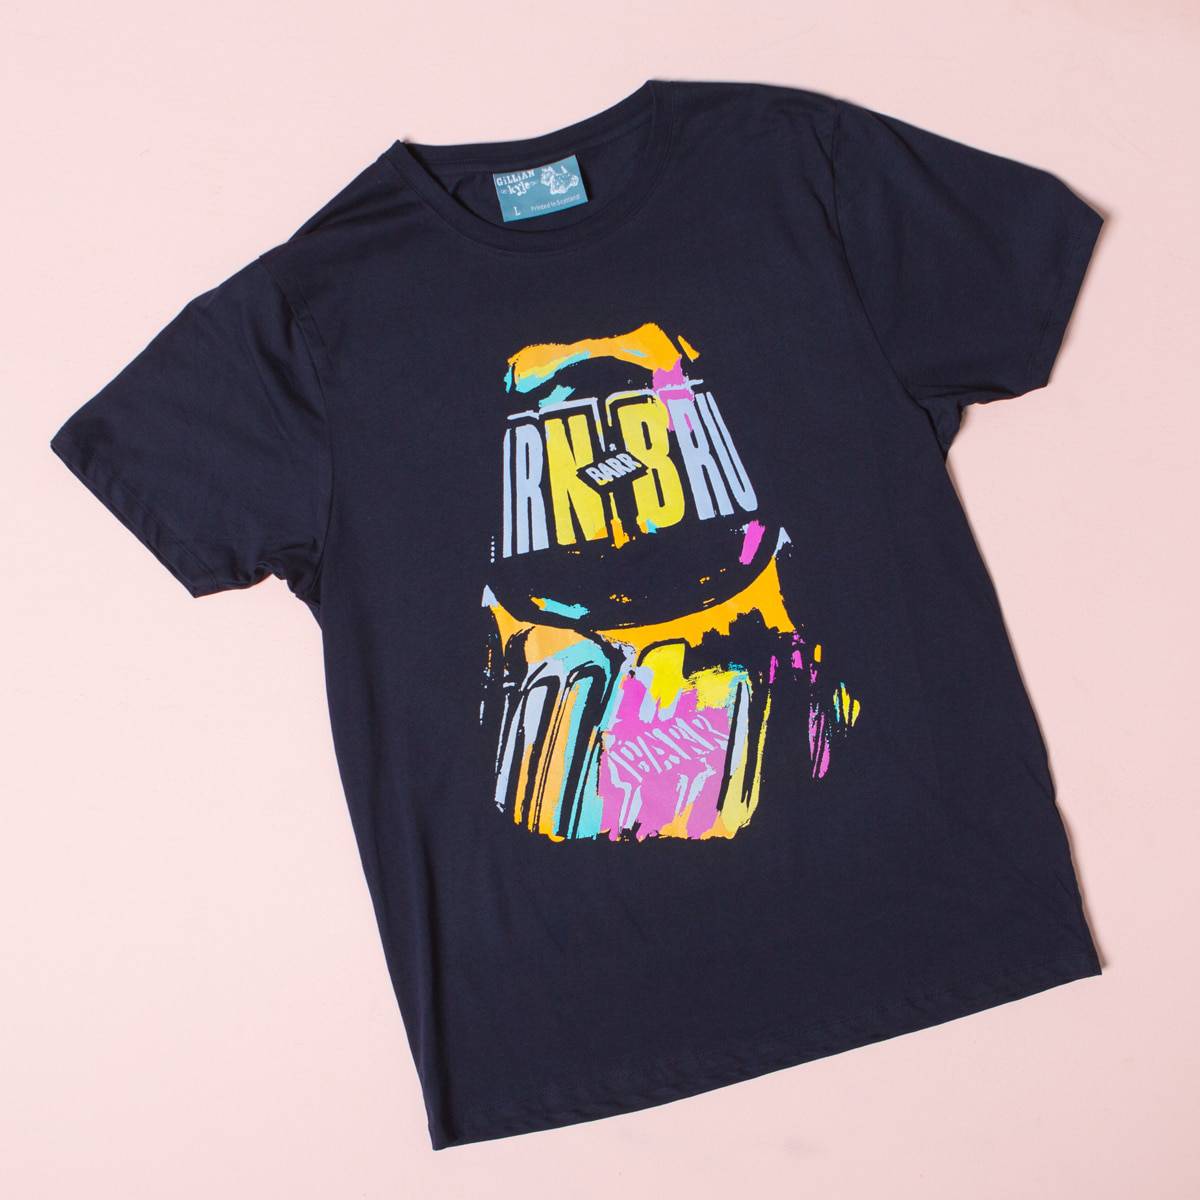 gillian-kyle-scottish-artist-irnbru-official-merchandise-tshirt-range-pop-art-range